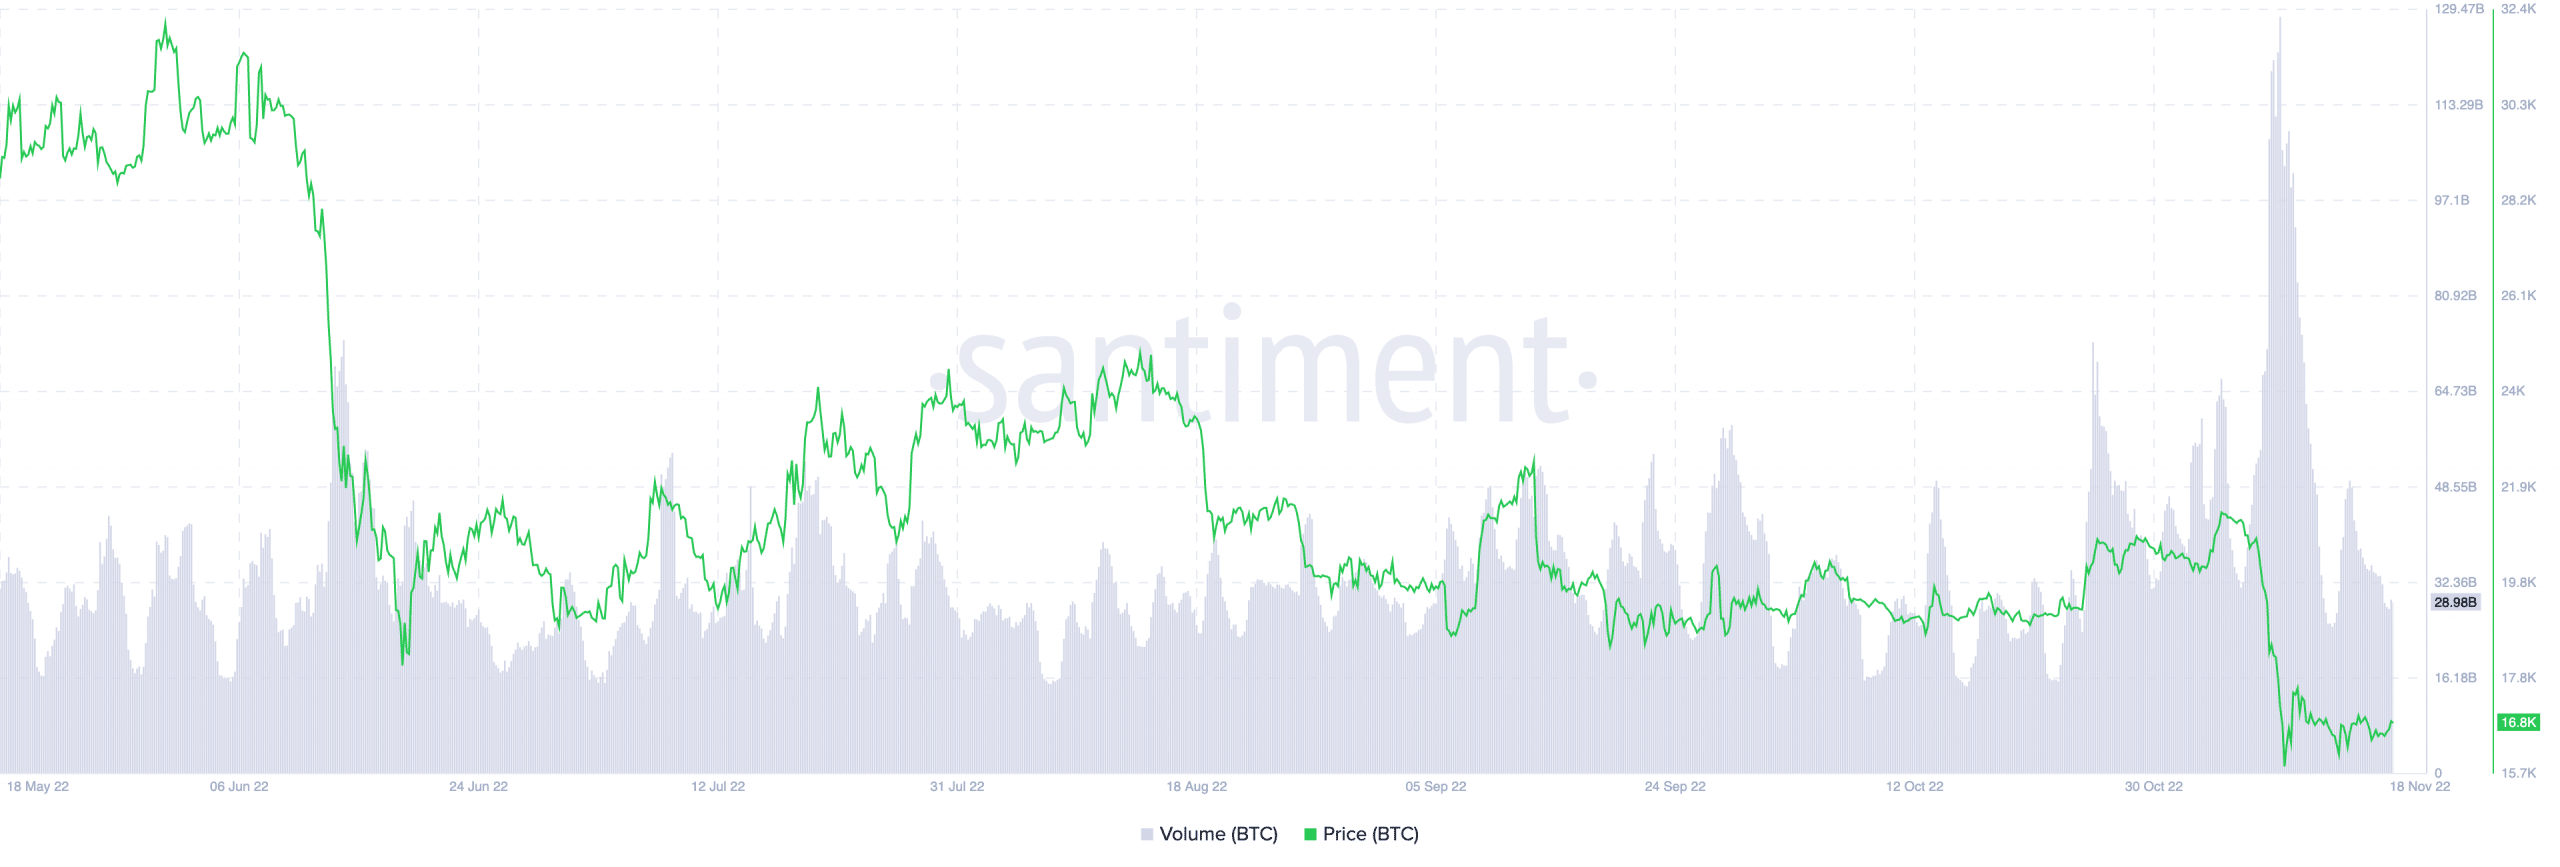 Bitcoin price and volume chart